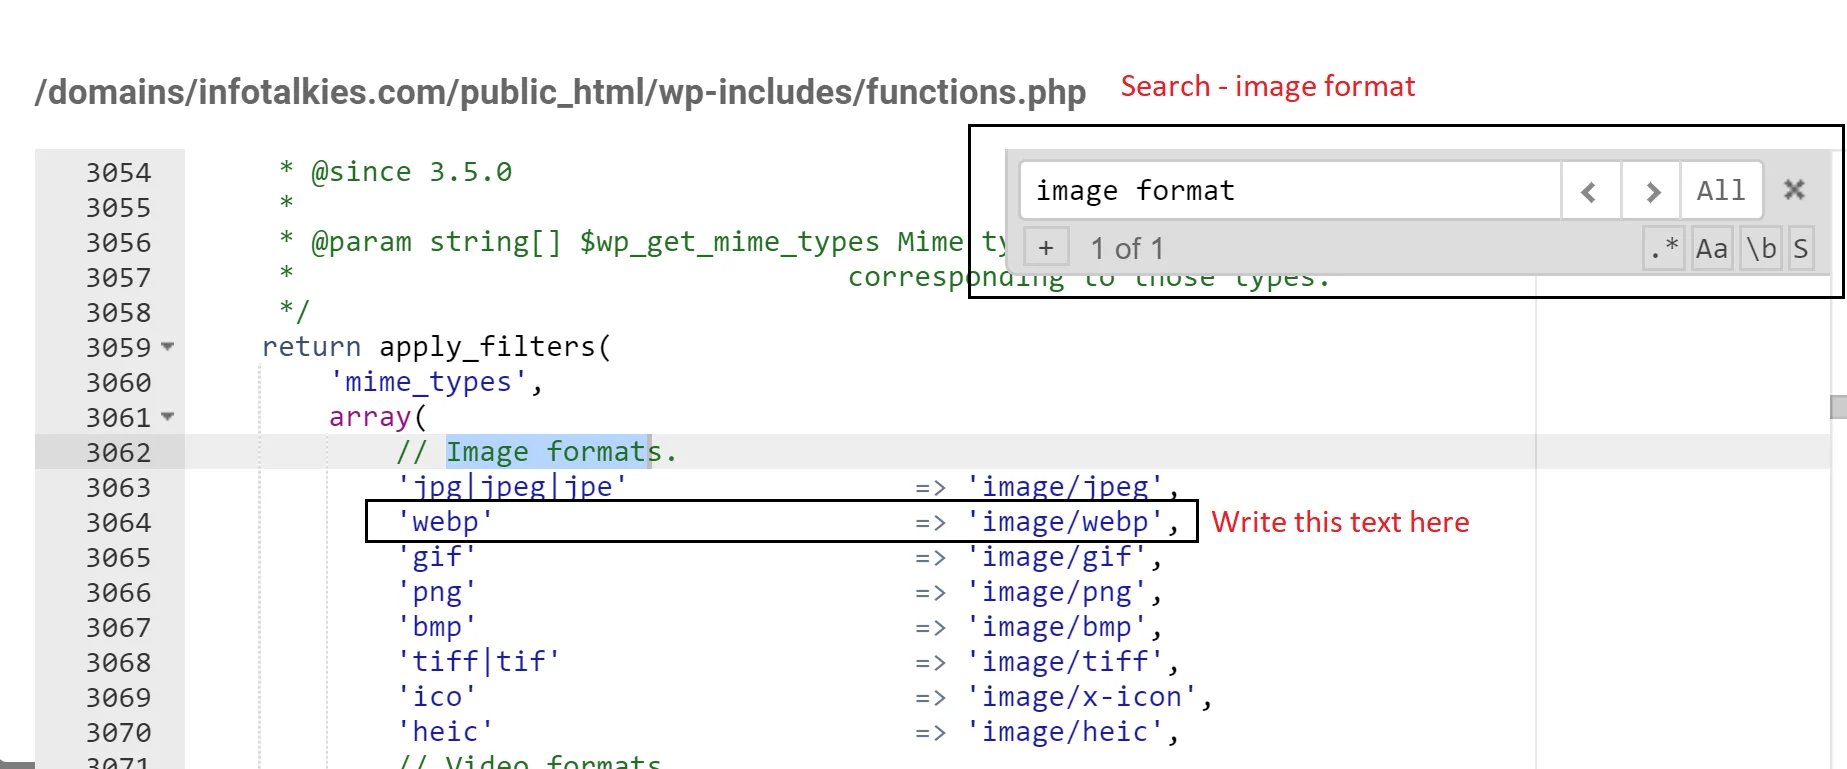 Webp - Image format (Fix error and upload WebP images on WordPress by Cpanel)